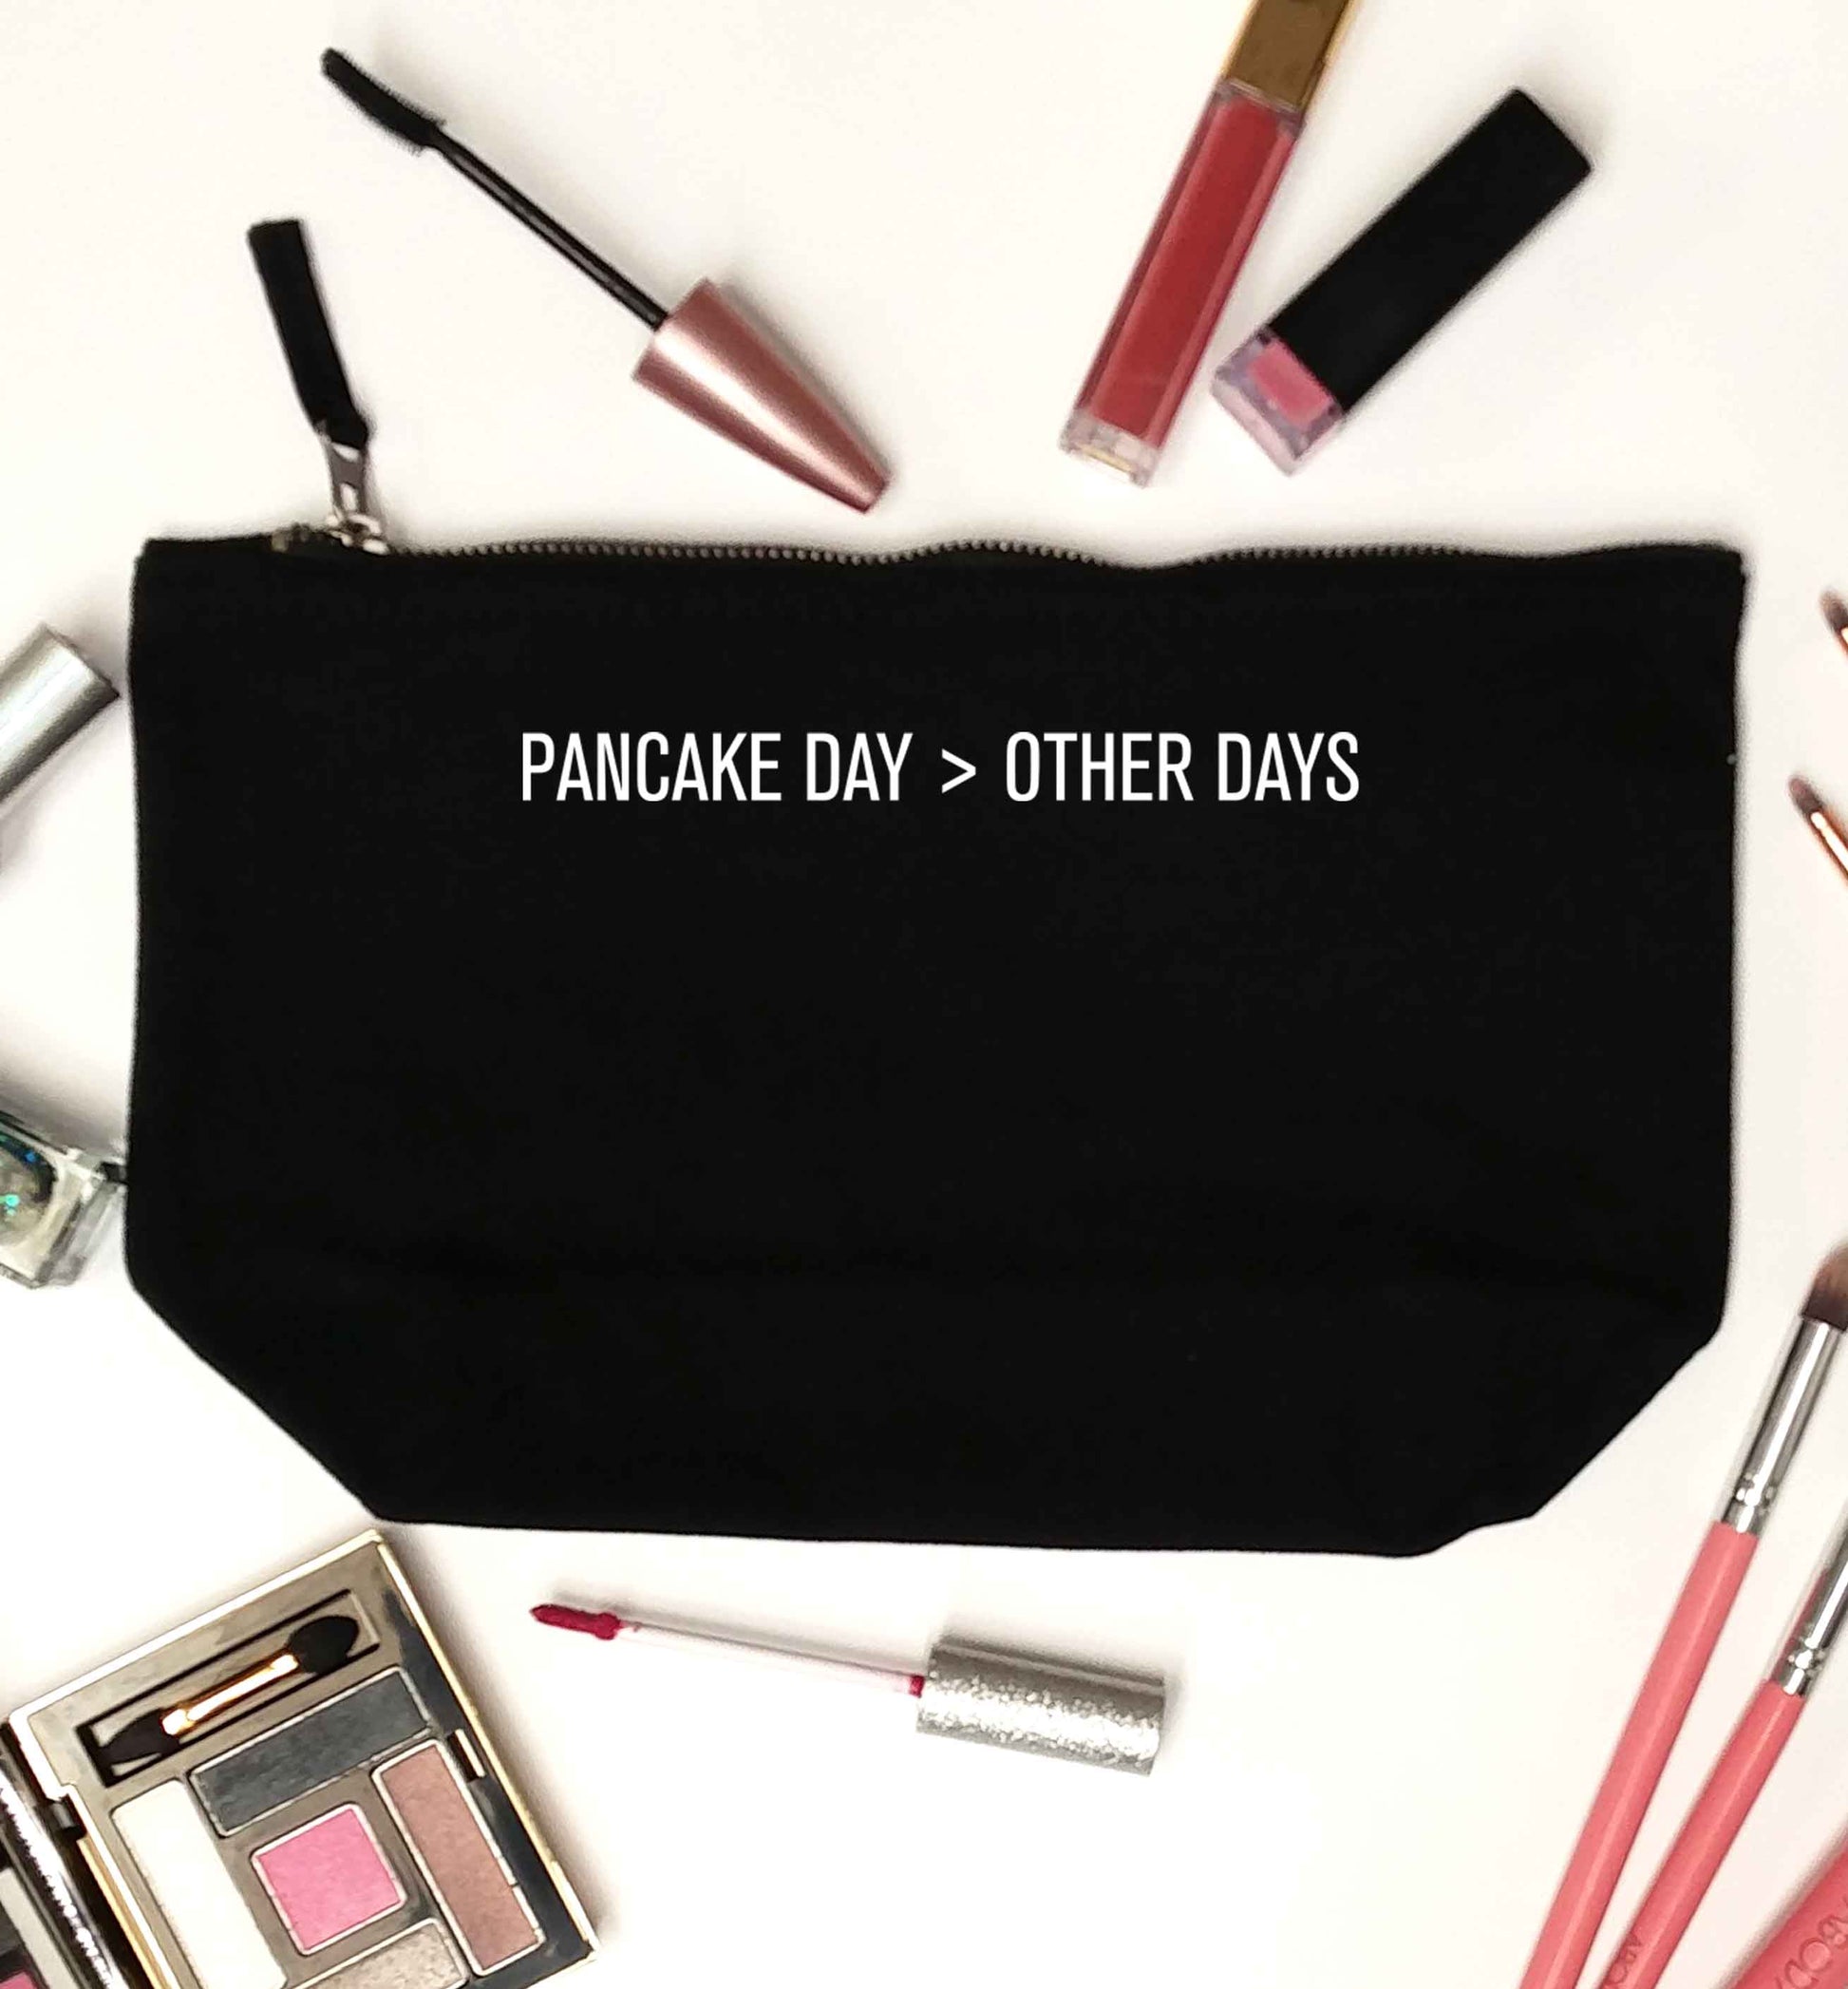 Pancake day > other days black makeup bag